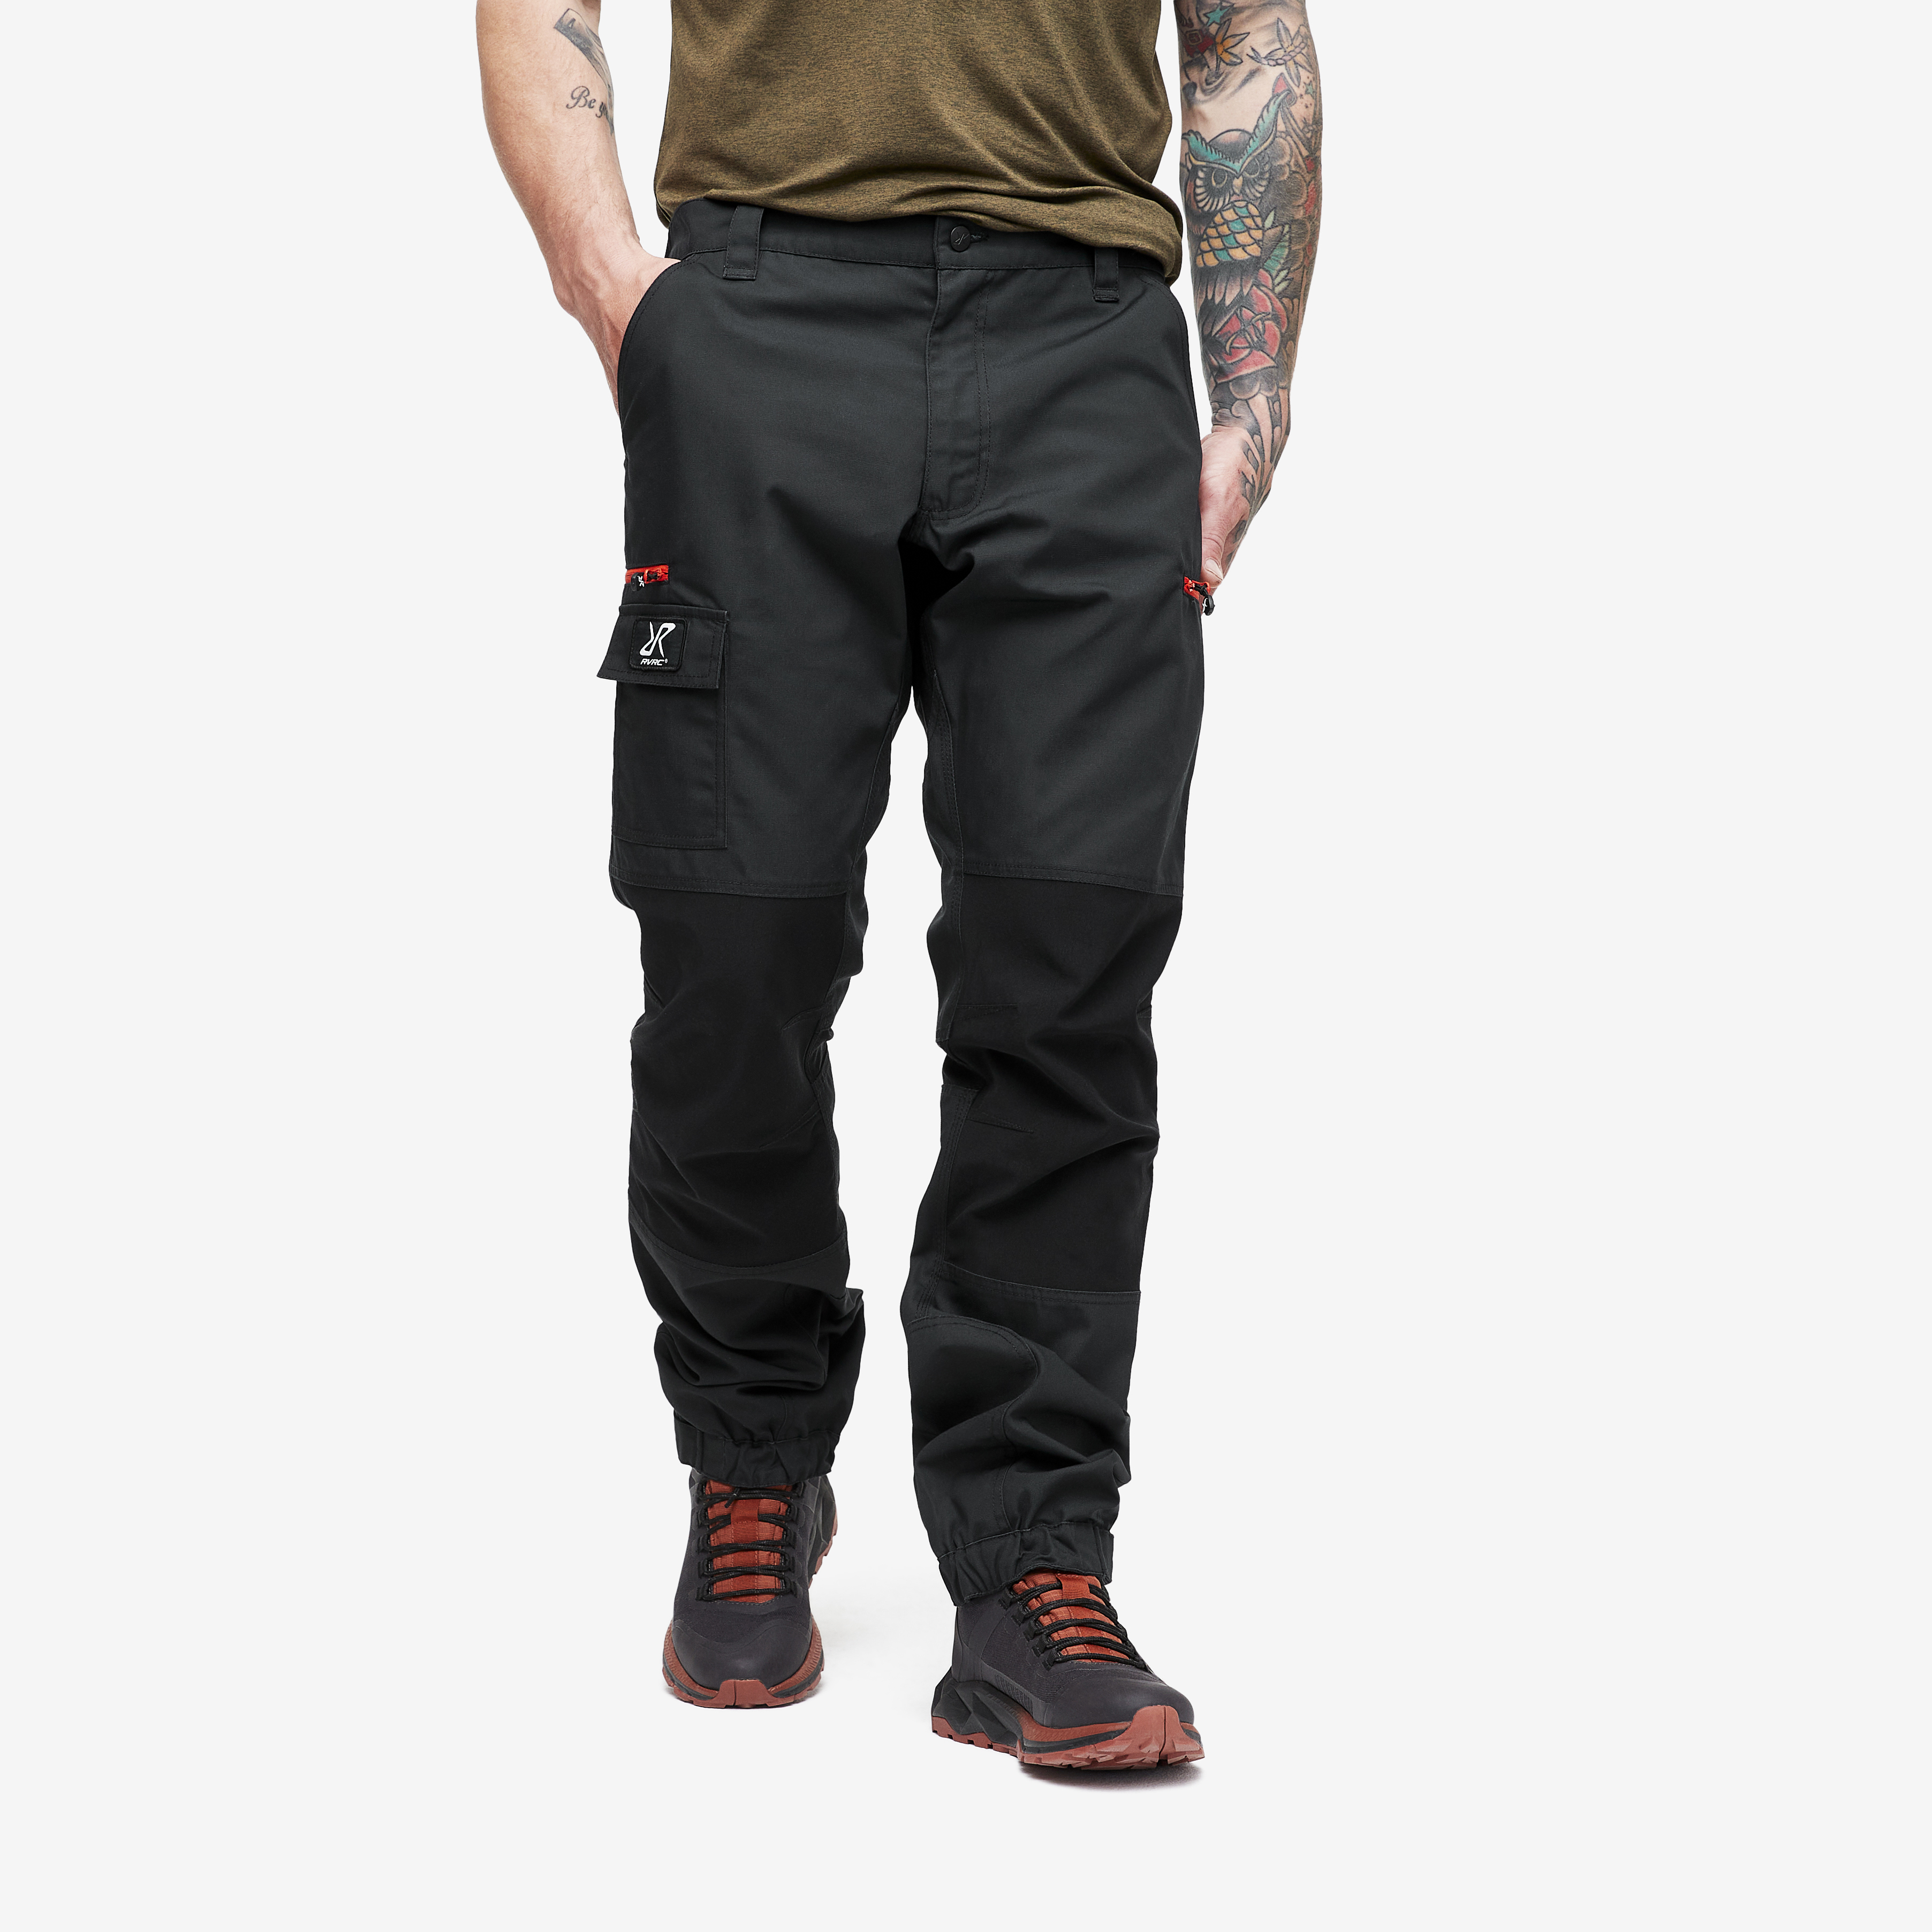 Nordwand Pants Charcoal Black/Lava